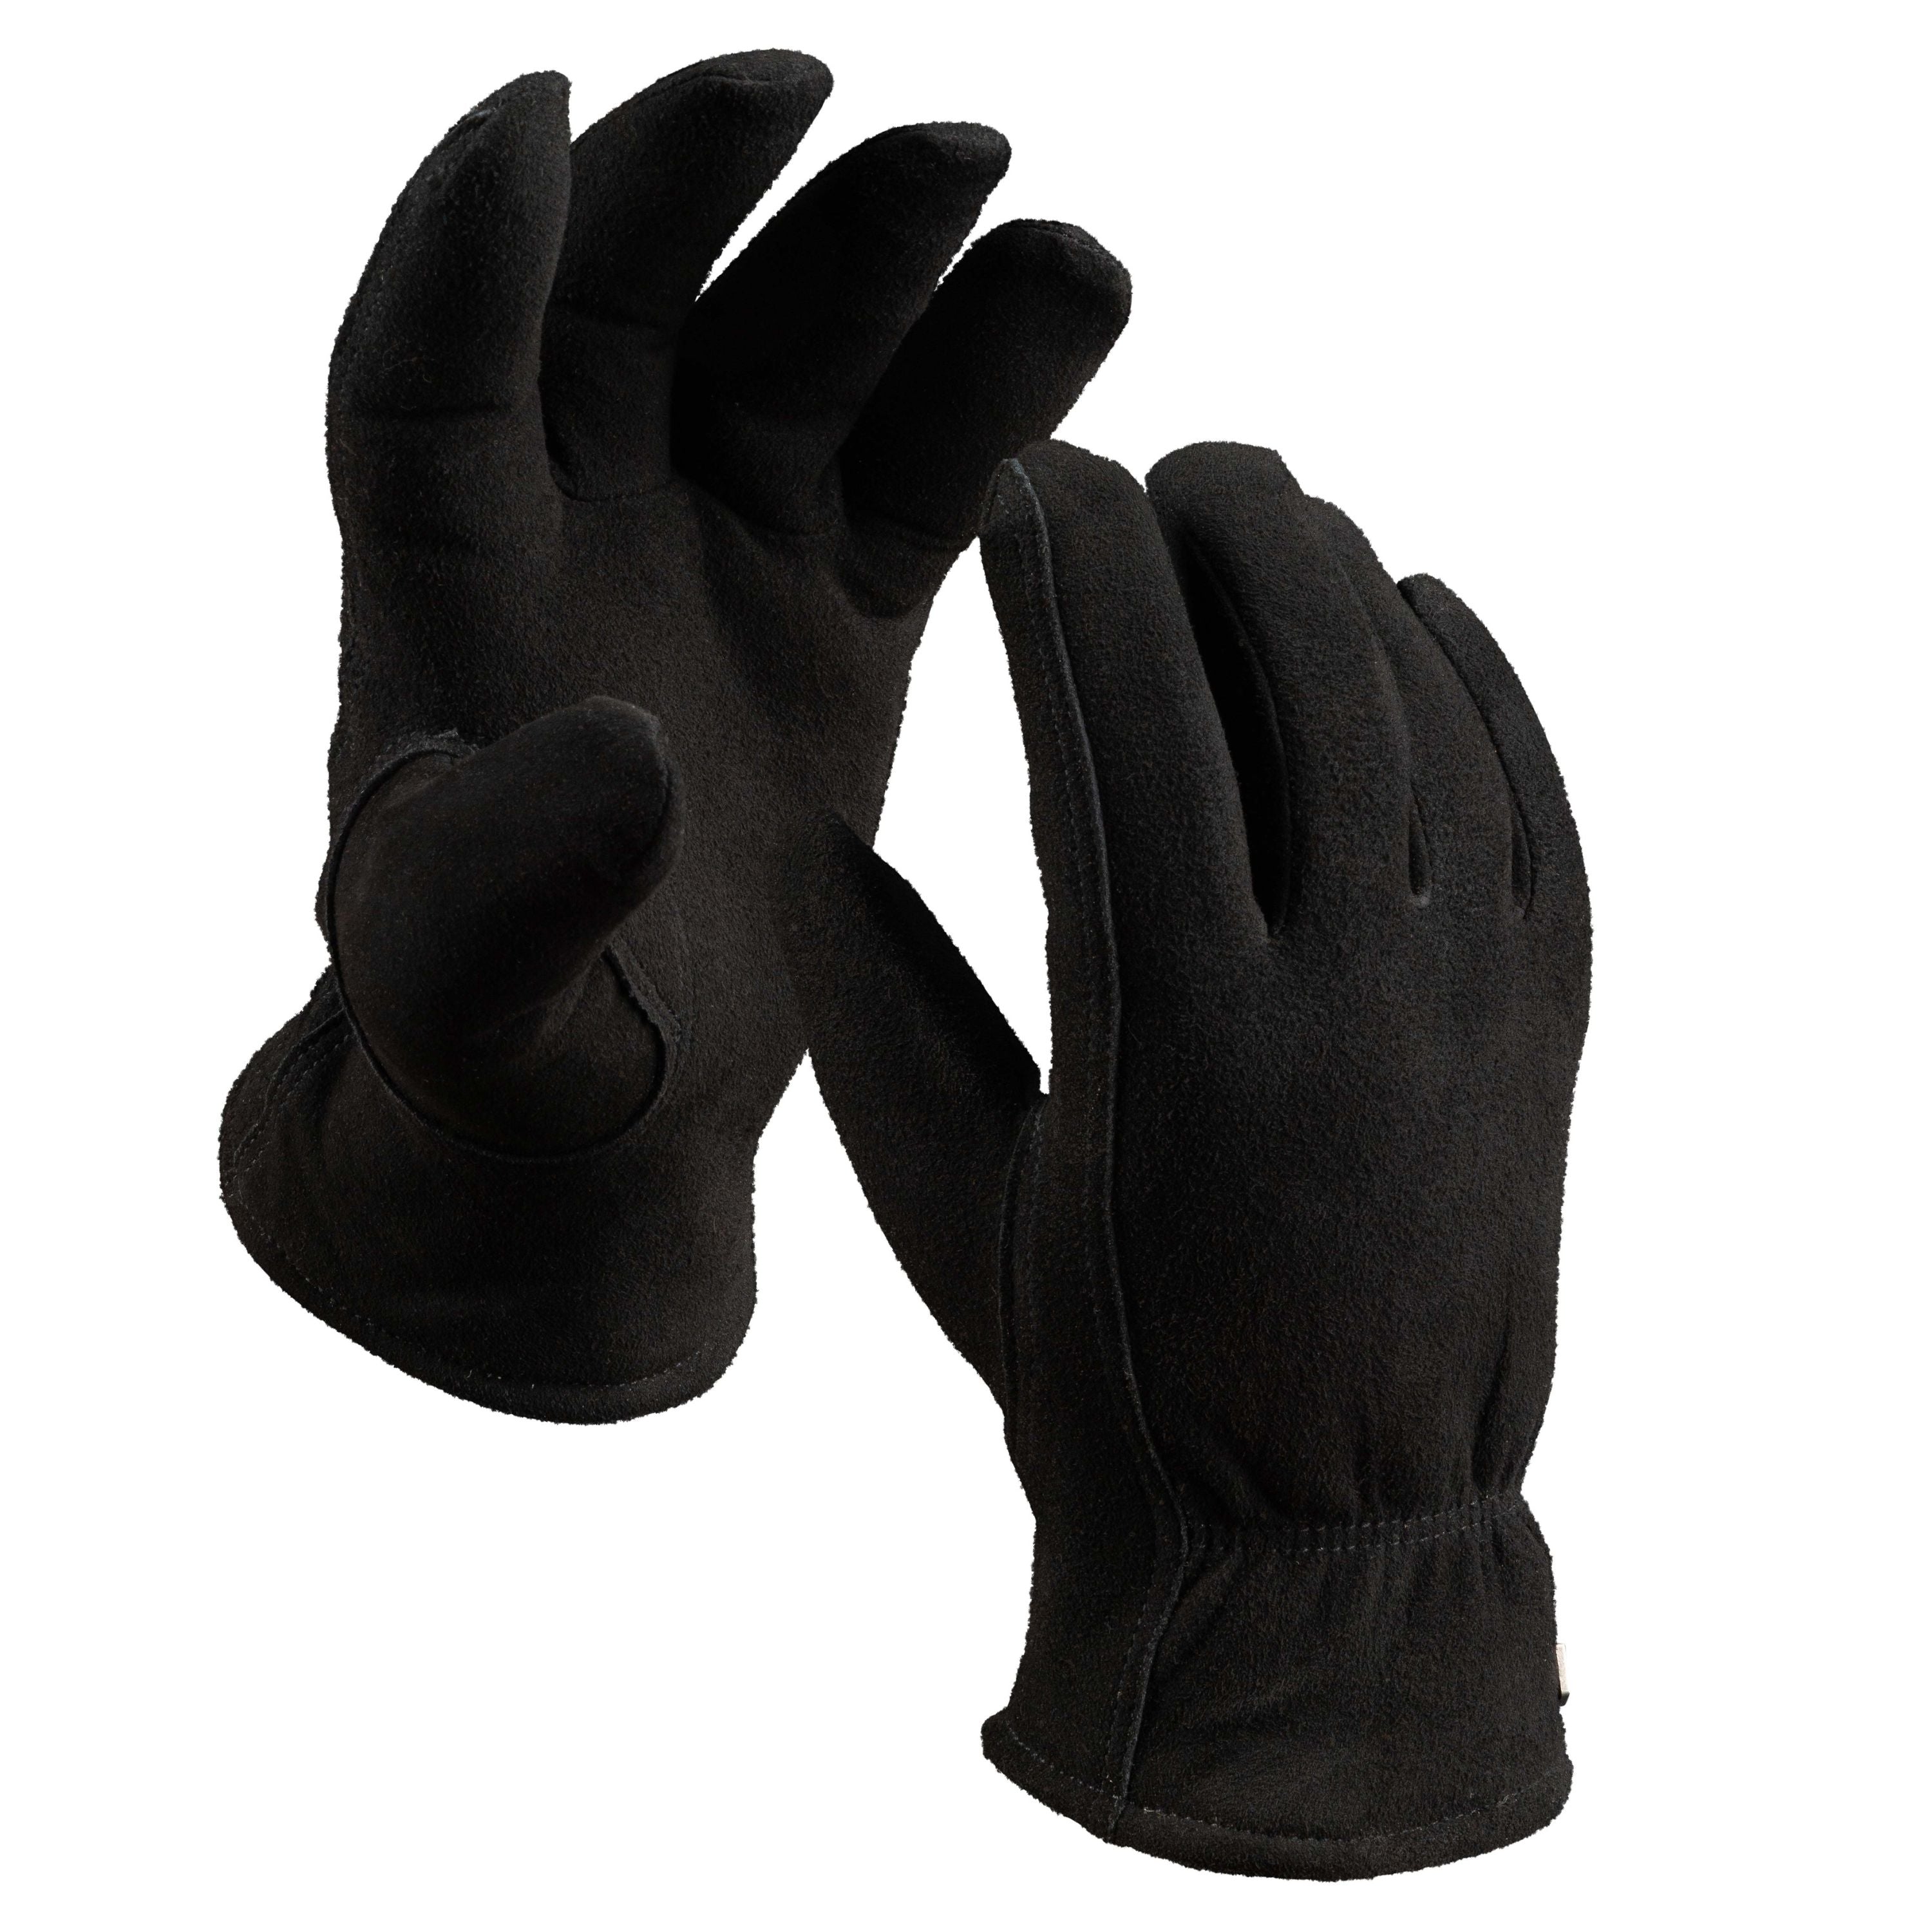 "Chamonix II" Leather city gloves - Men’s